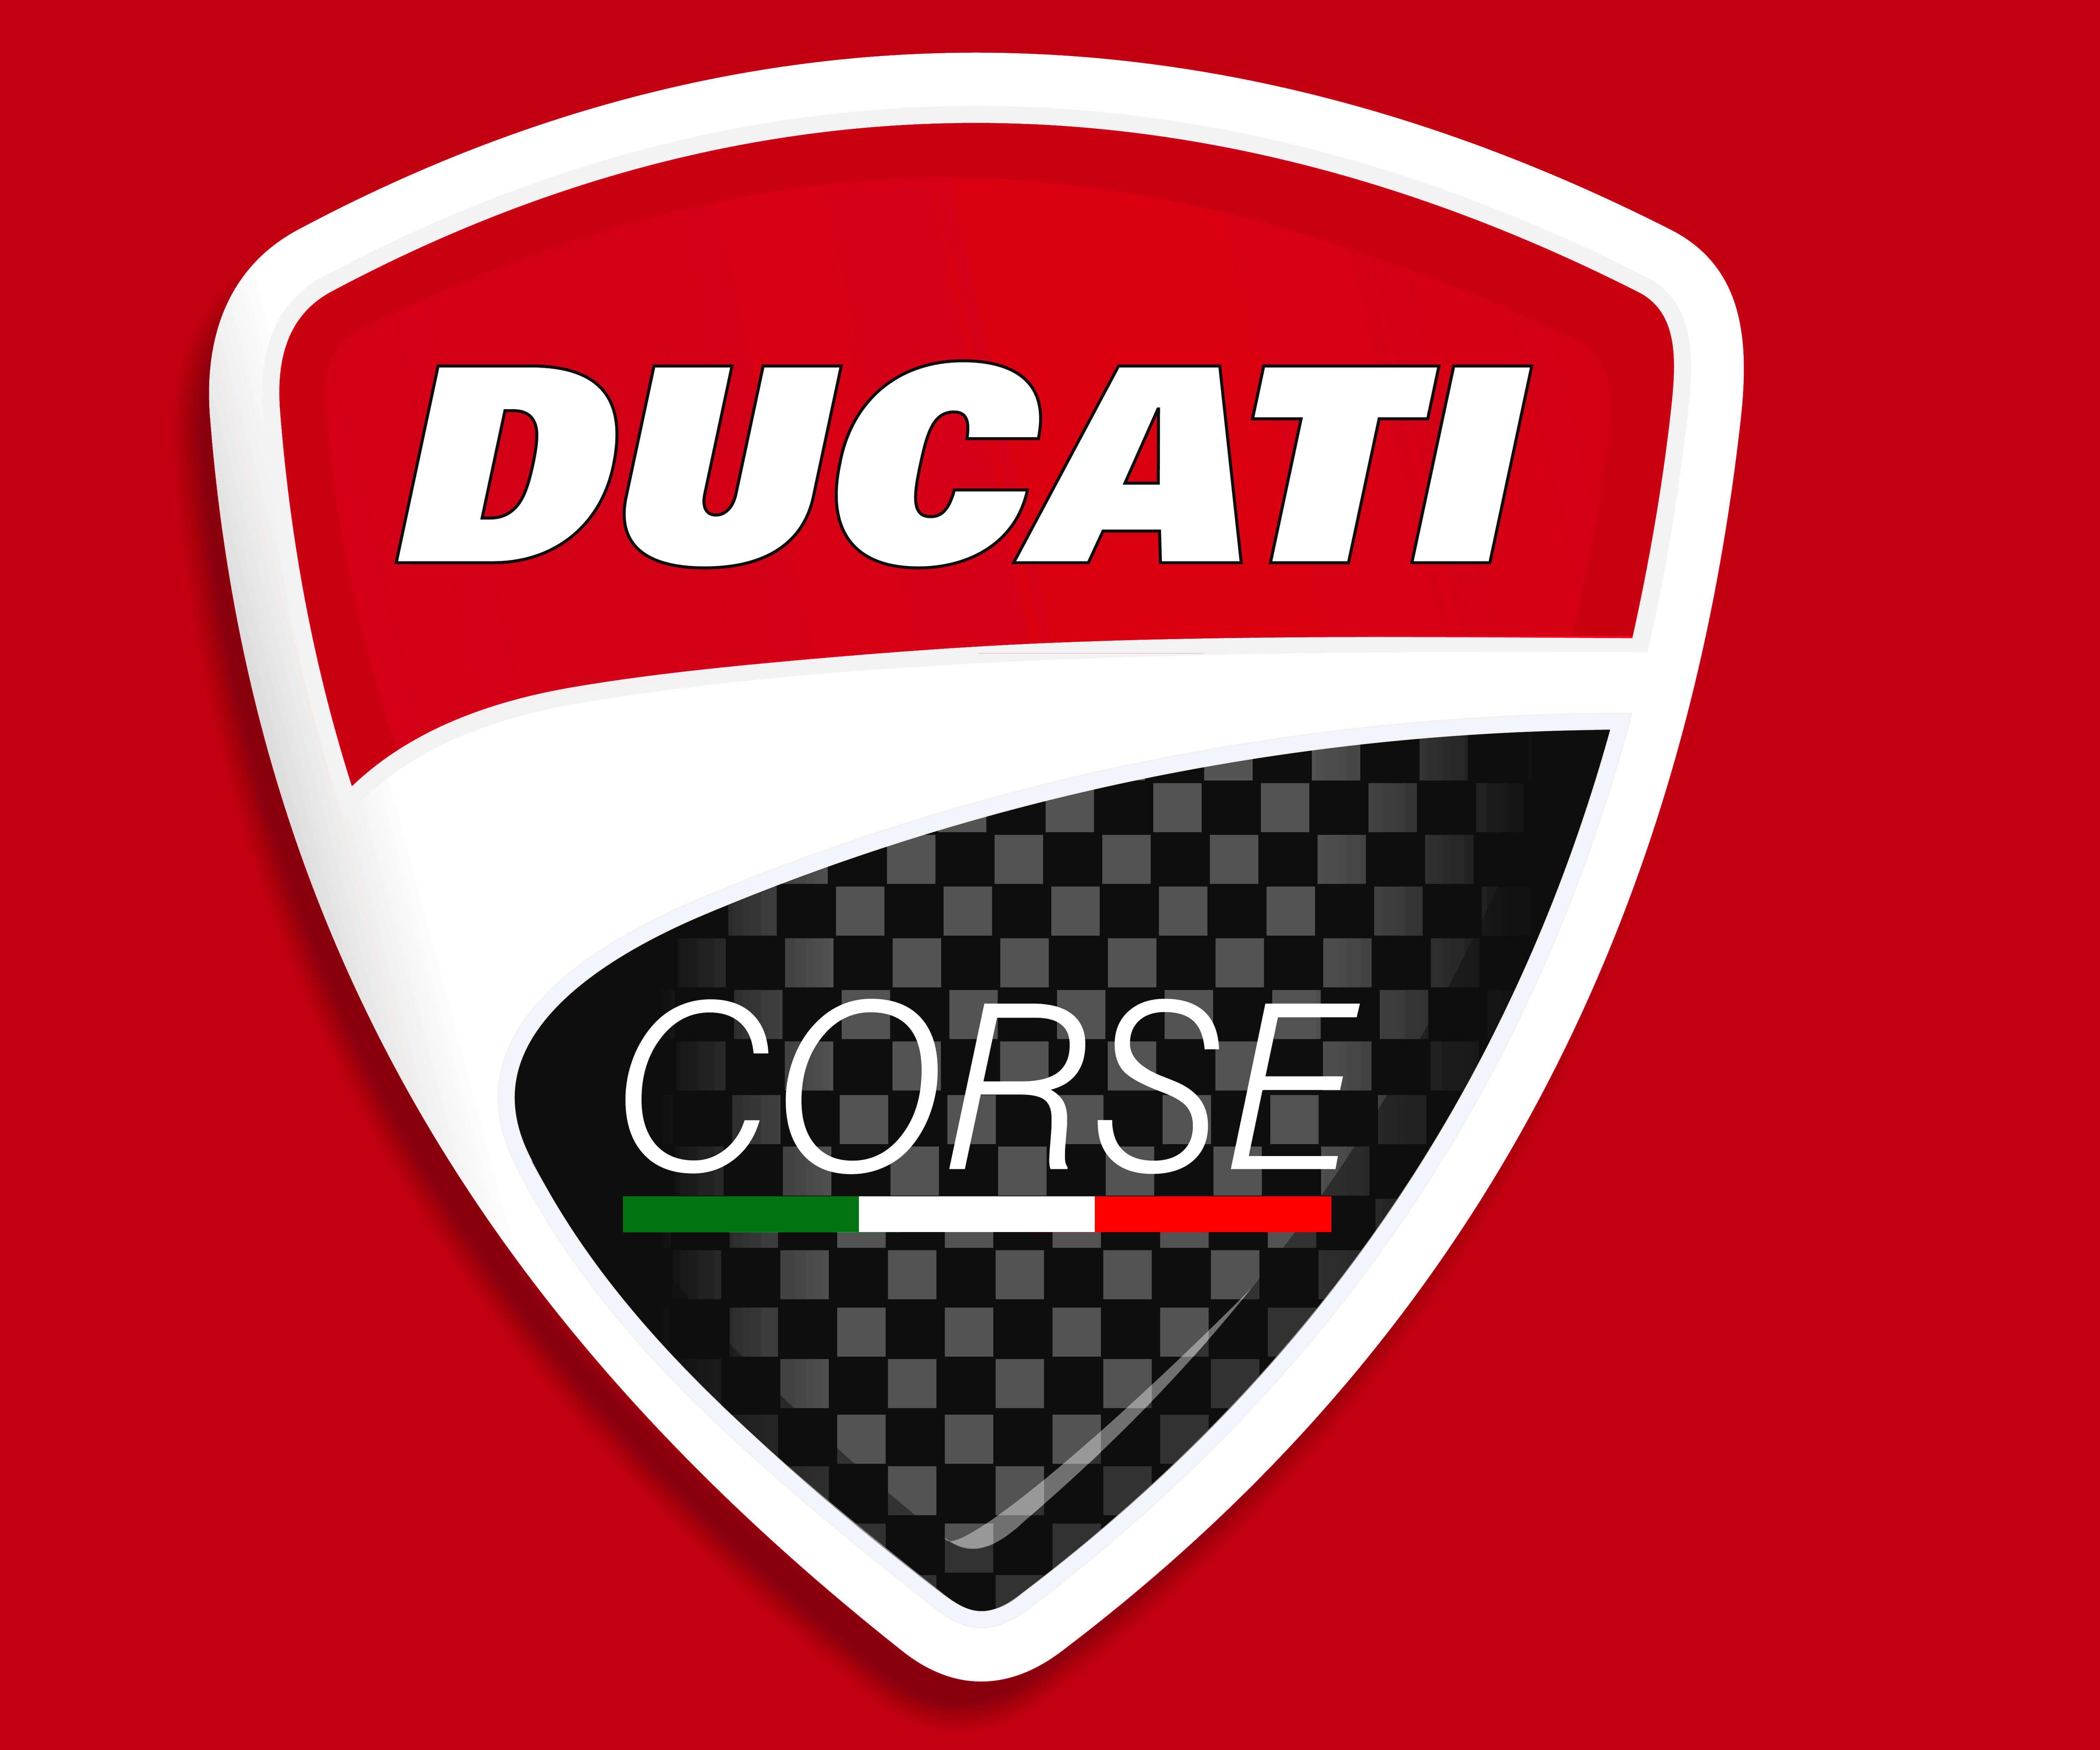 Ducati Logo - Ducati Corse Logo | Motorcycle Logos | Ducati, Motorcycle logo ...